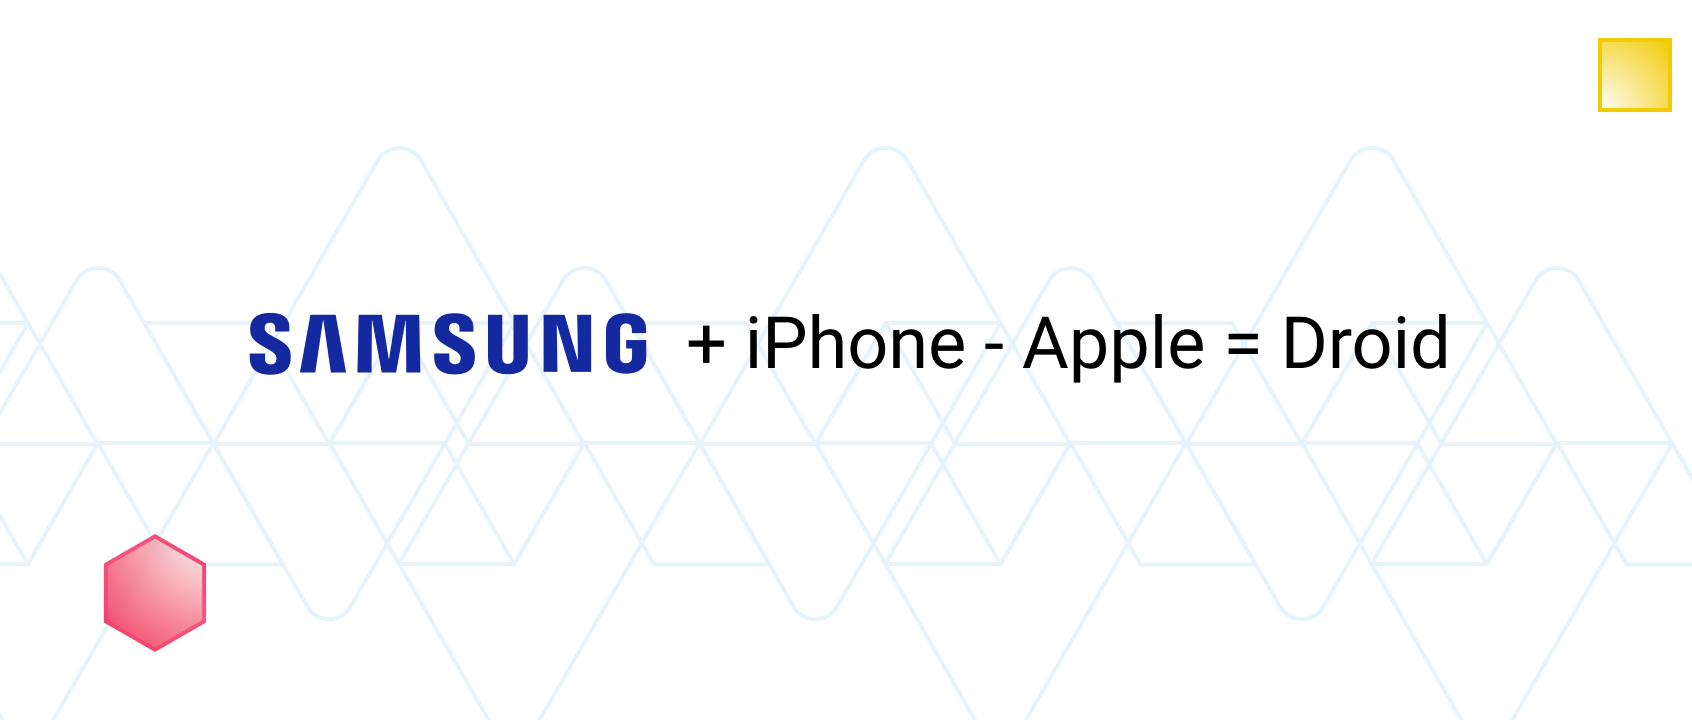 Droid - Samsung's first 4G LTE smartphone